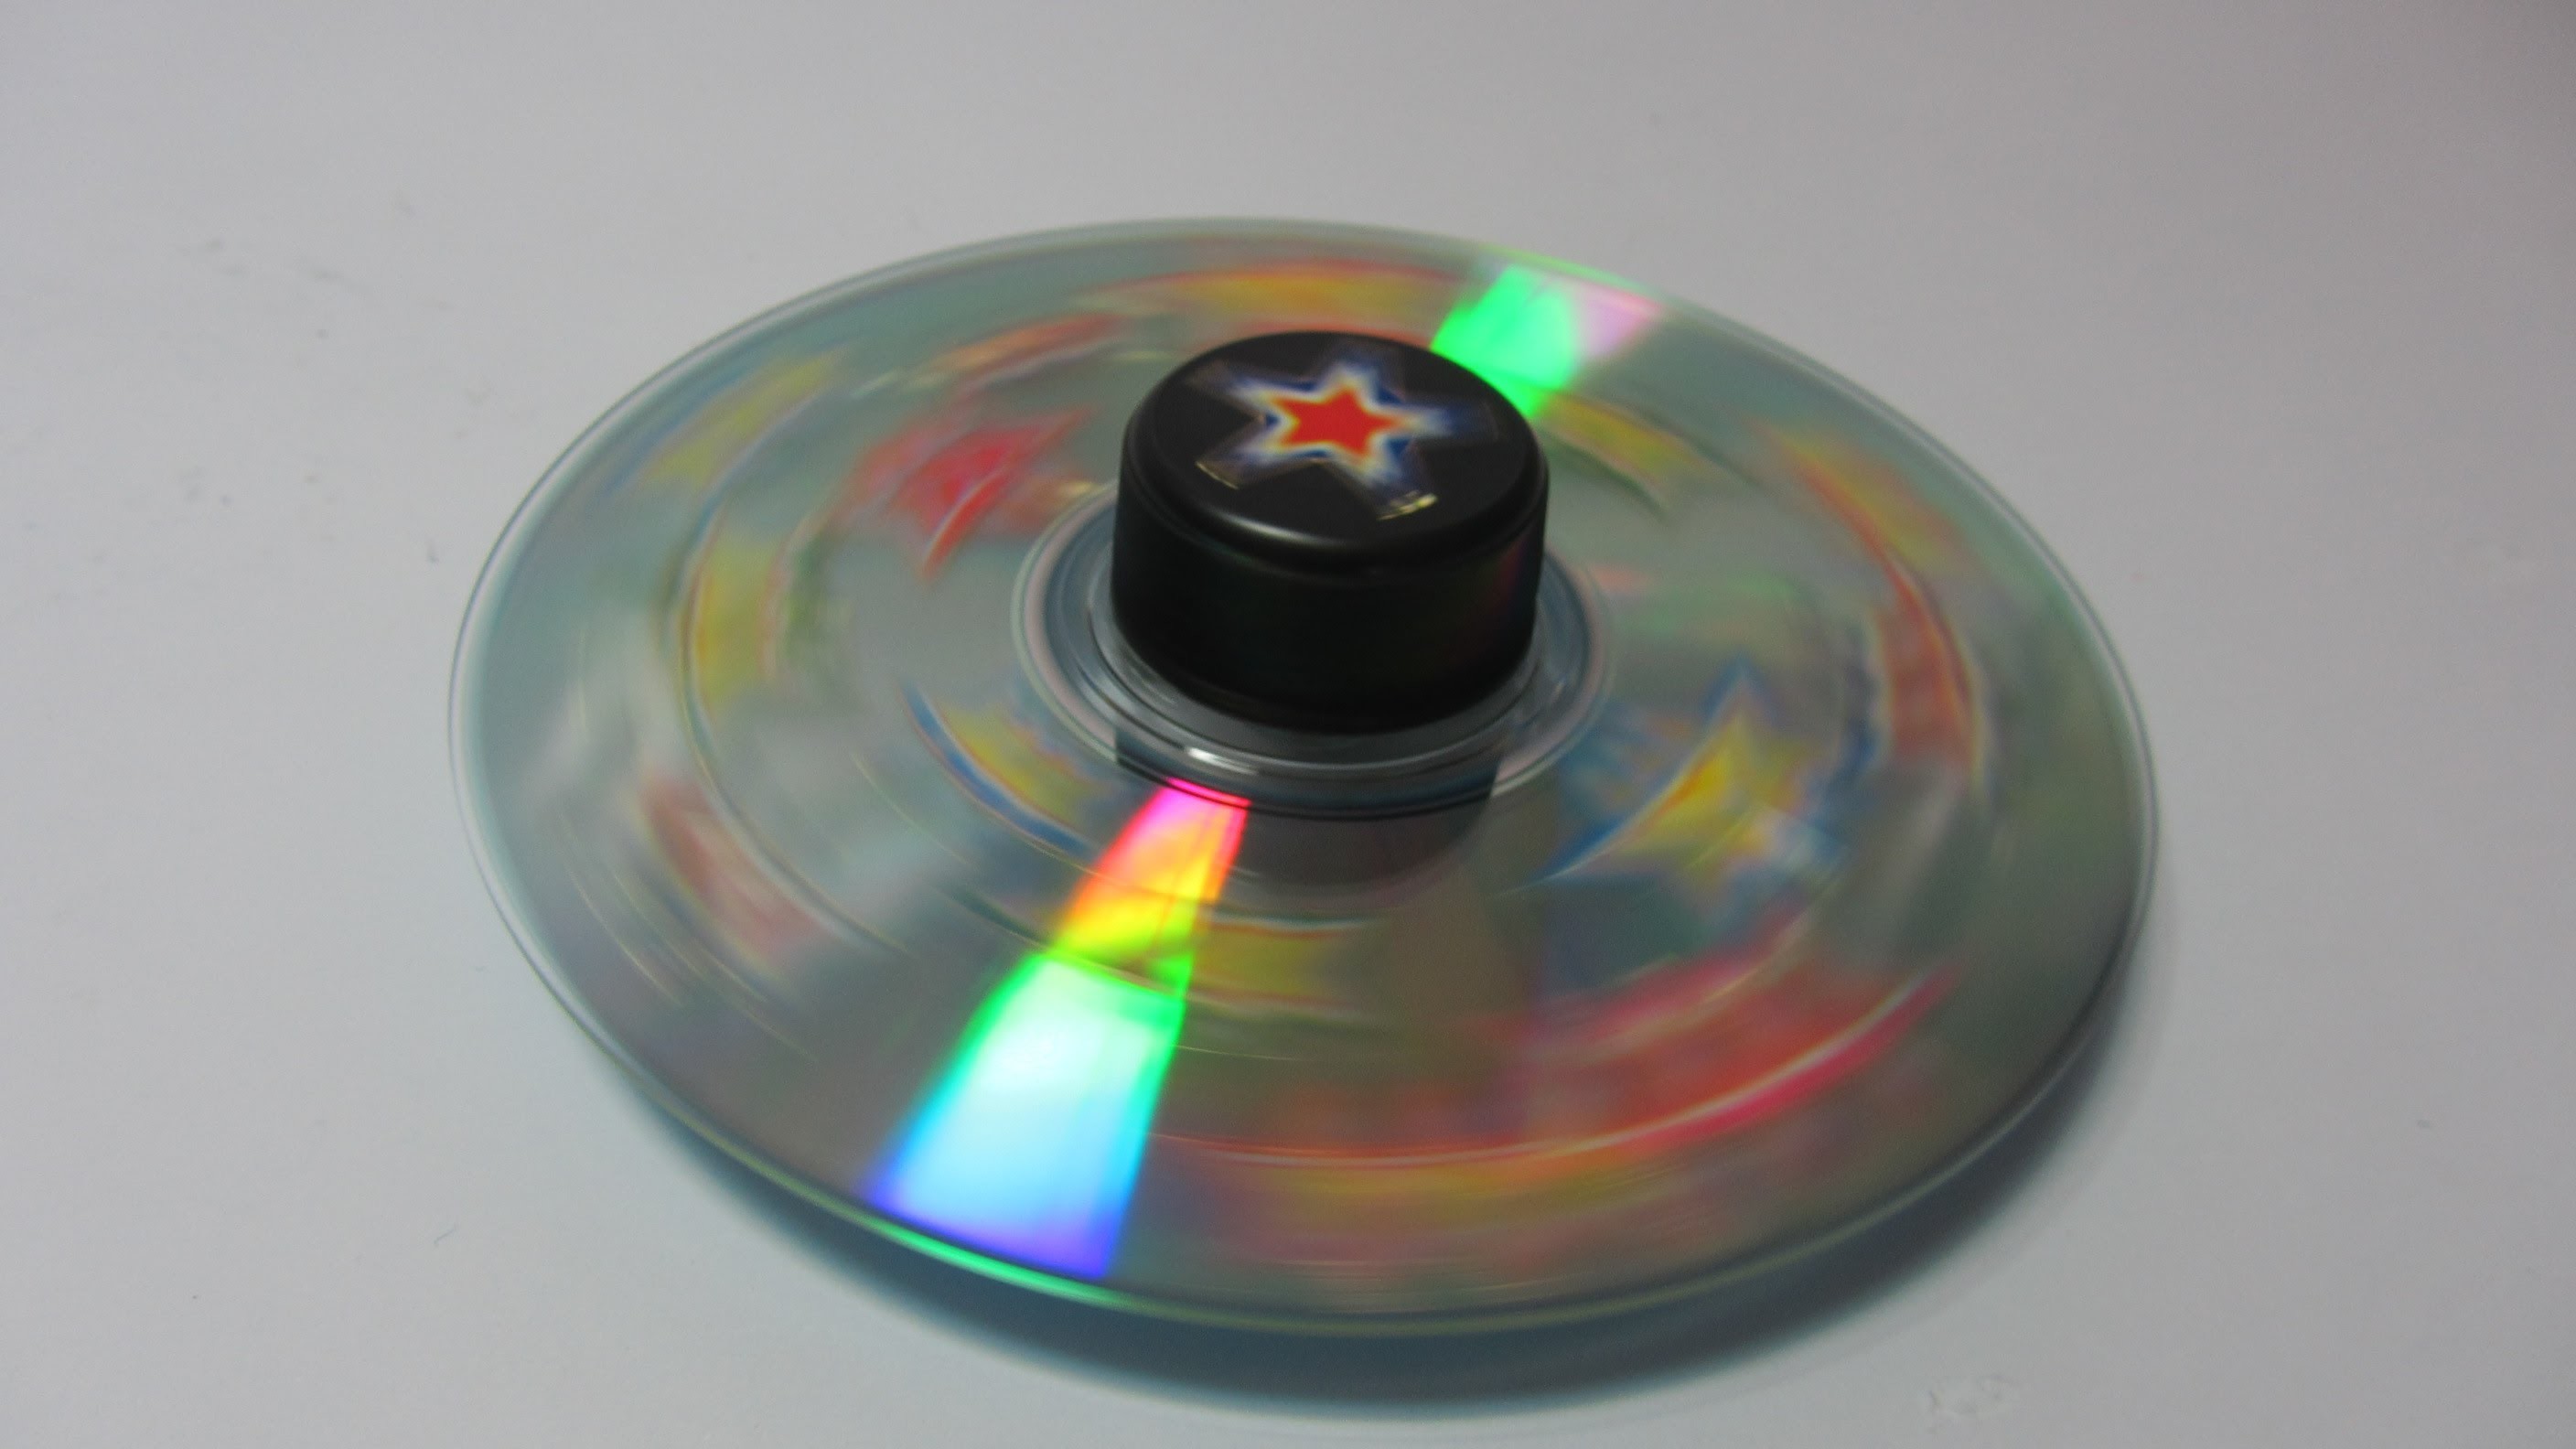 Reciclaje: Disco giratorio (niños). Rotating disk.